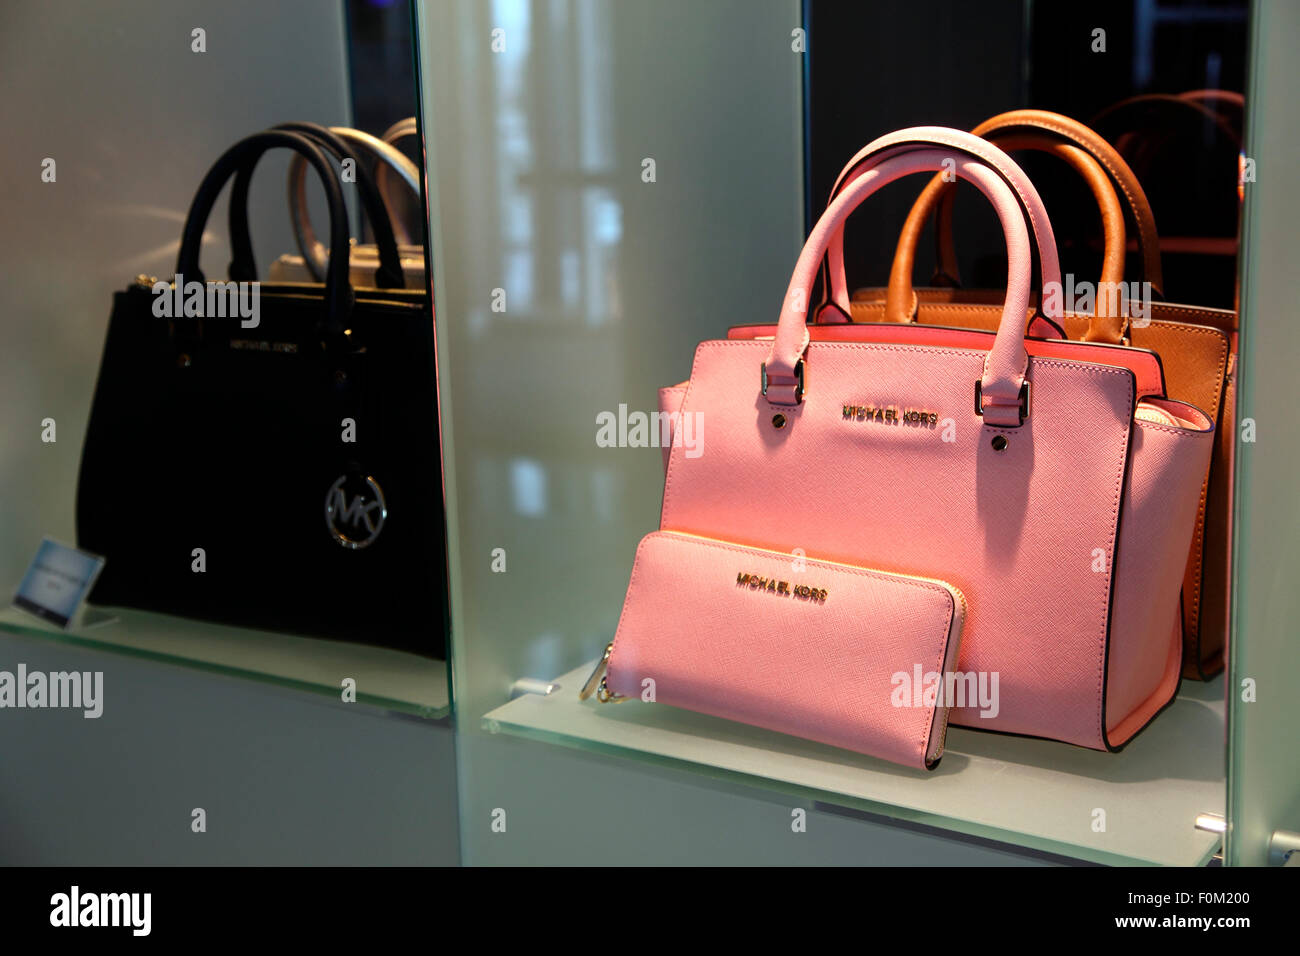 Michael kors handbags e imágenes de alta resolución - Alamy